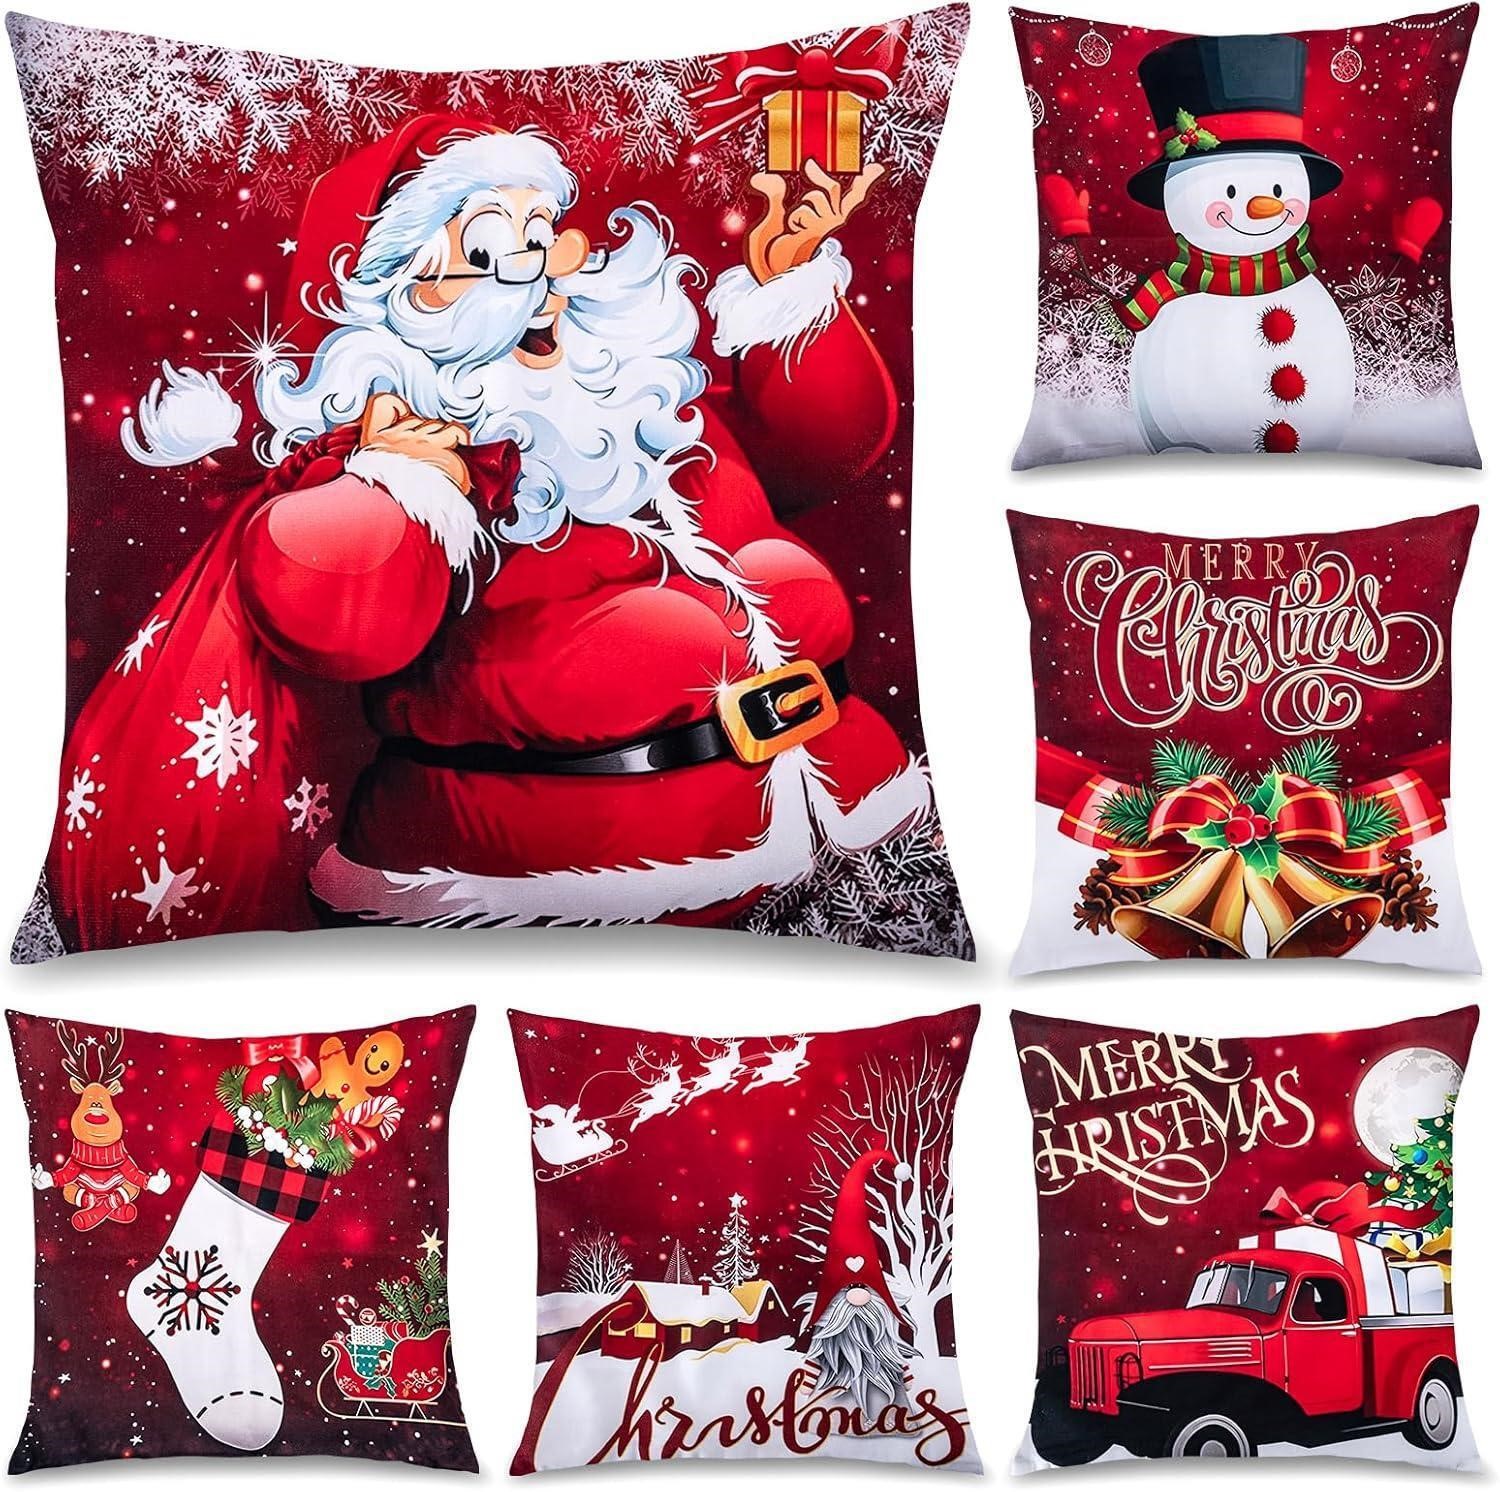 Matymats 50x50cm Christmas Cushion Covers